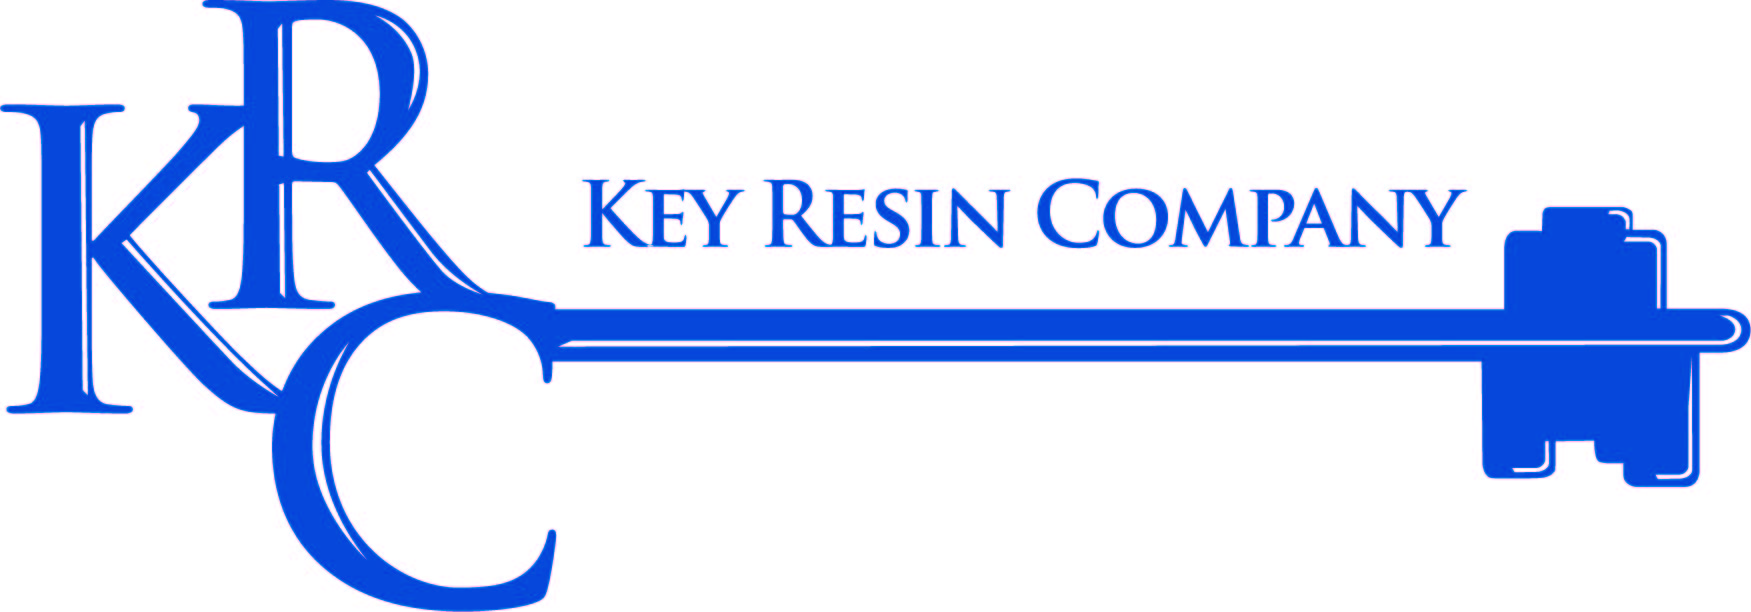 LT Key Blue JPG Logo with Company v1.0